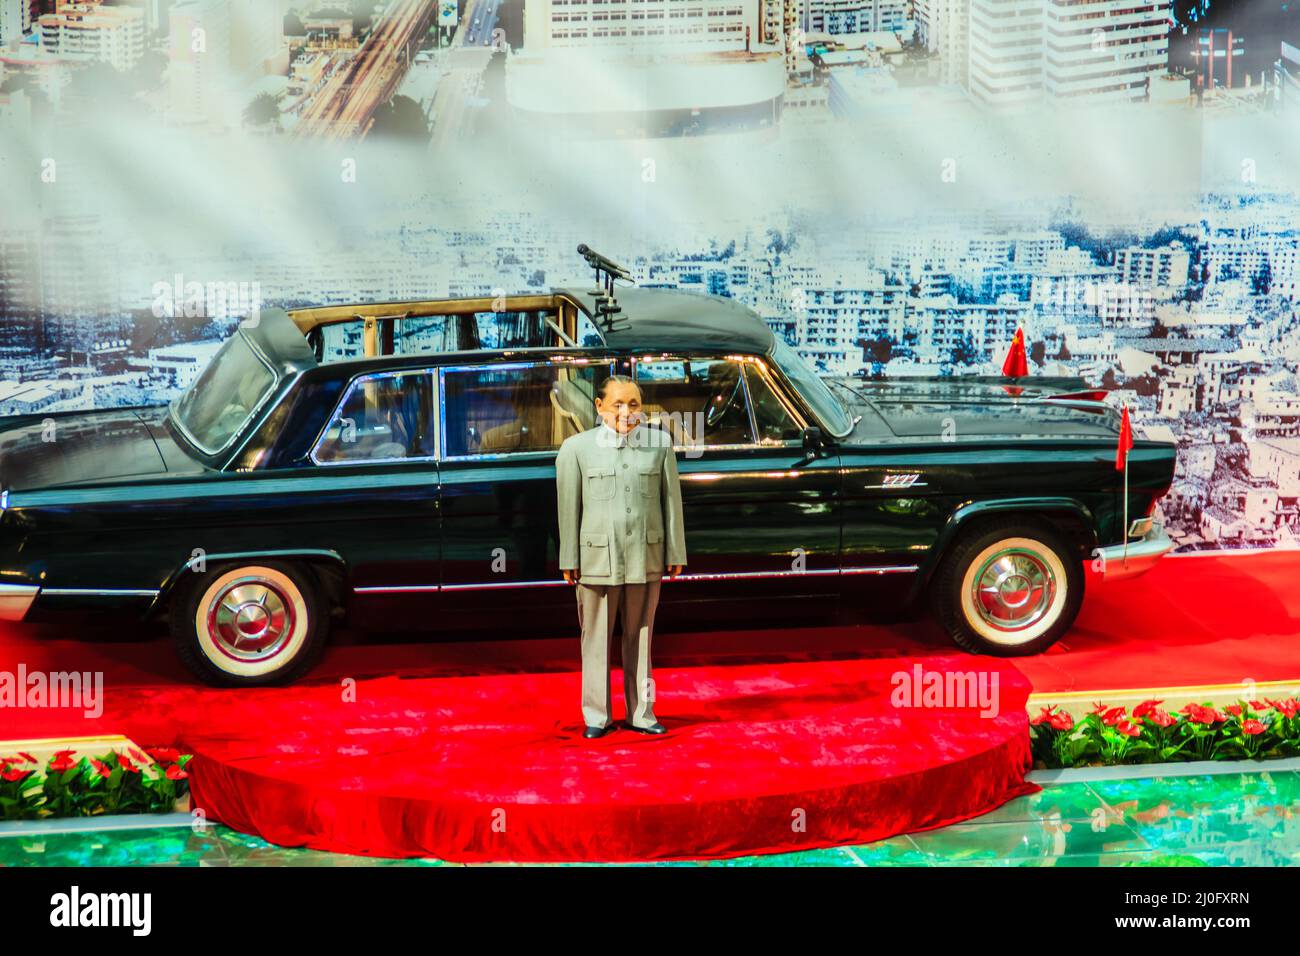 ShenZhen, China - November 15, 2014: Deng Xiaoping wax figure at Shenzhen museum. He was the Chinese revolutionary, statesman an Stock Photo